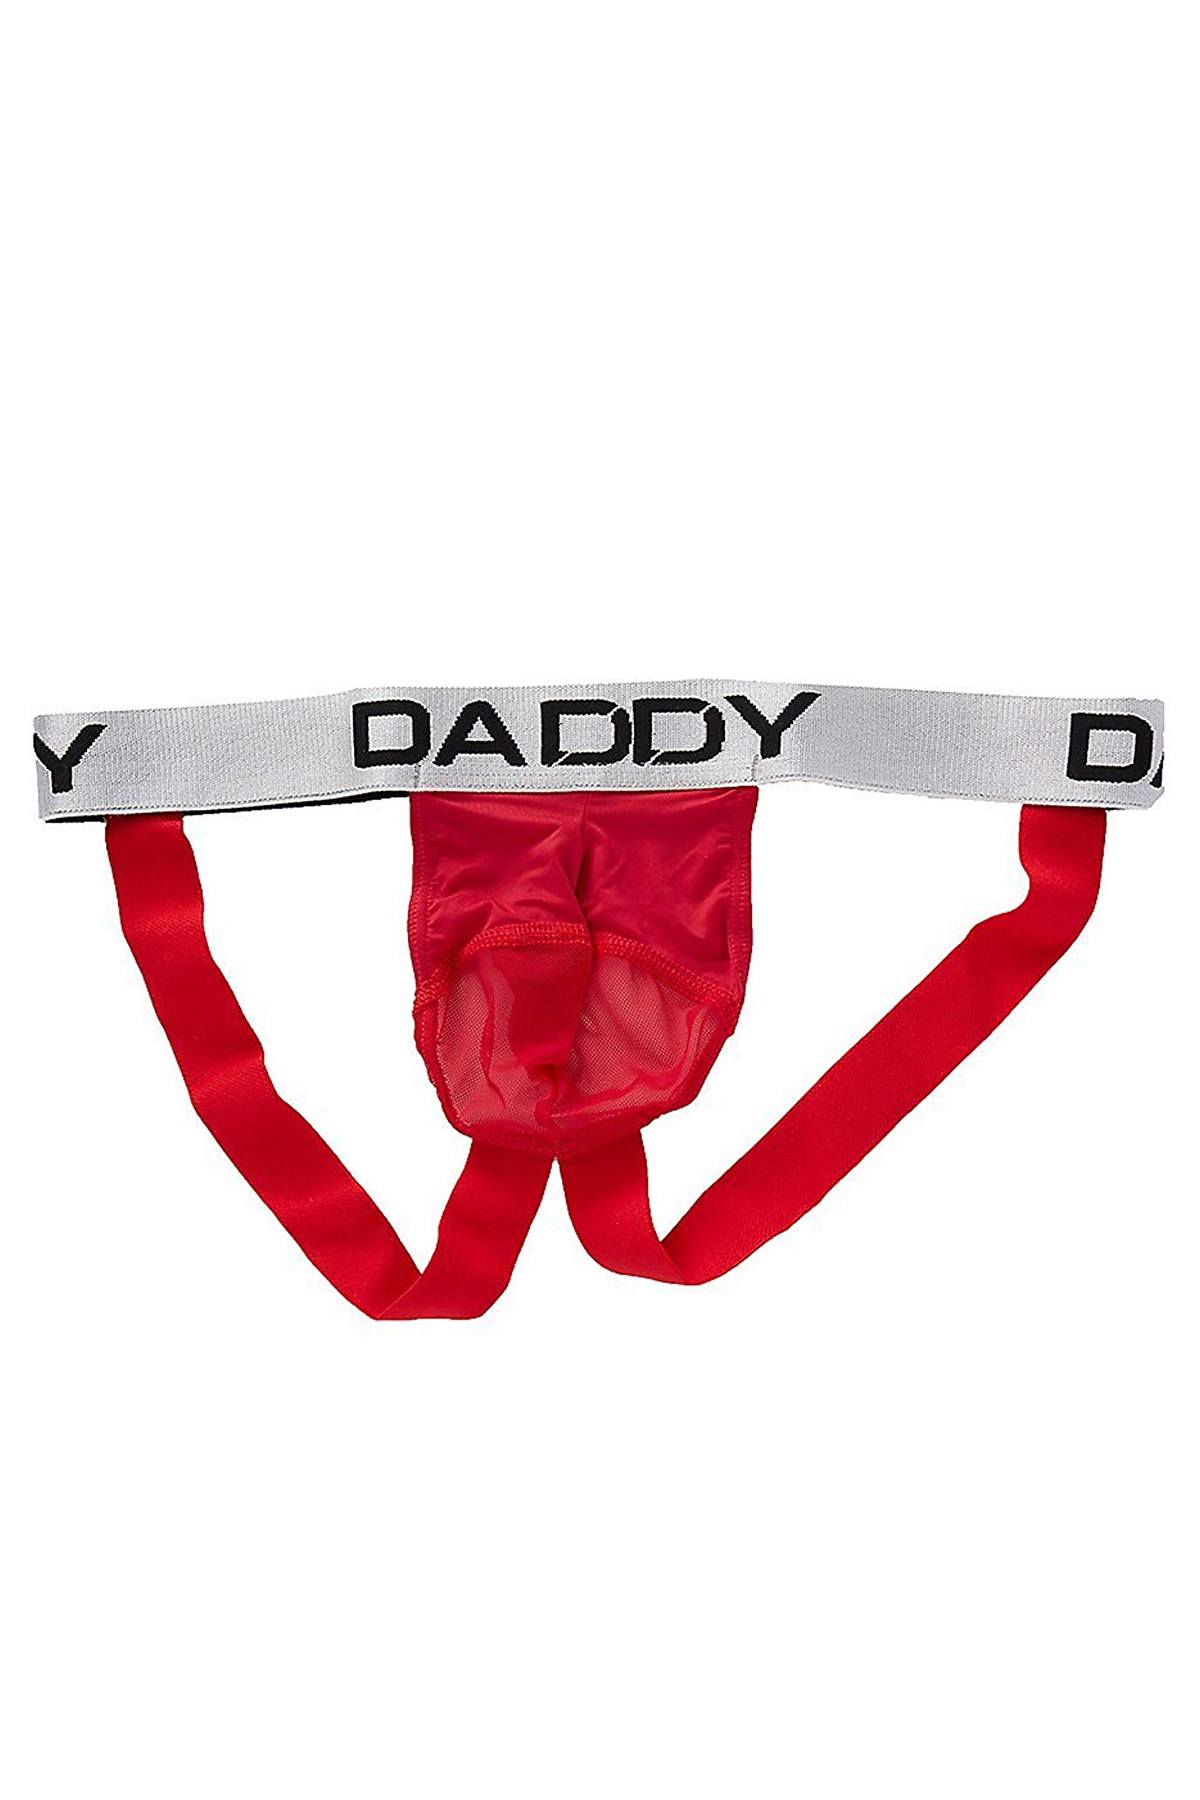 Daddy Red Sheer-Mesh Classic Jock